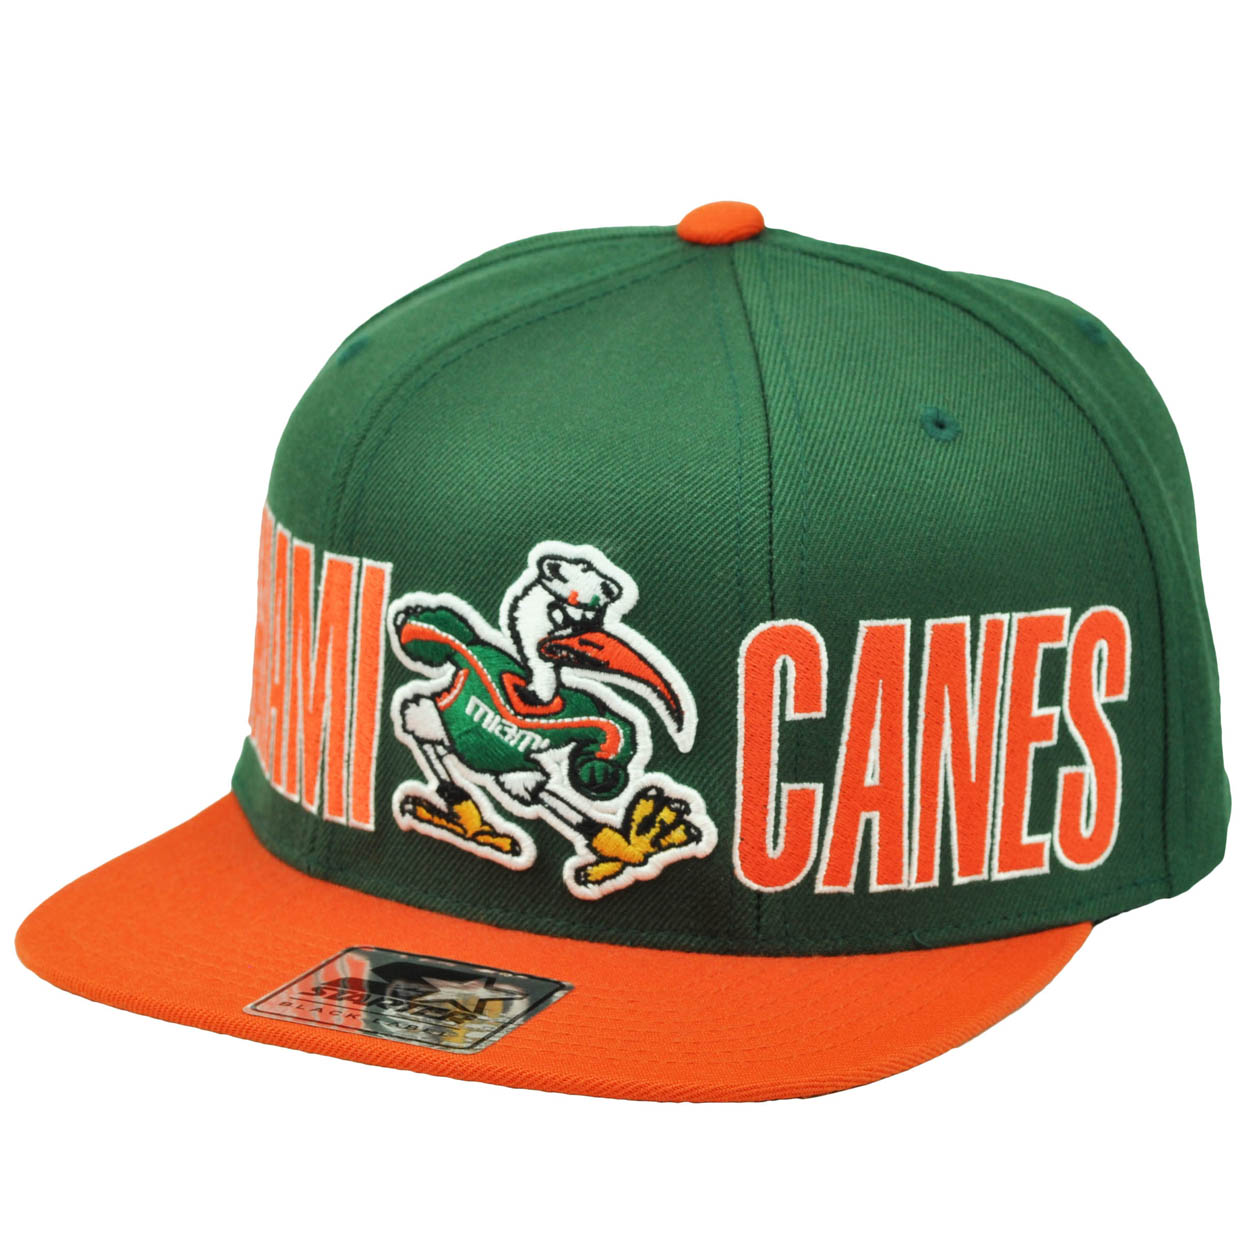 Starter Black Label NCAA Starter Miami Hurricanes Snapback Hat Cap Green  Canes Orange Flat Bill